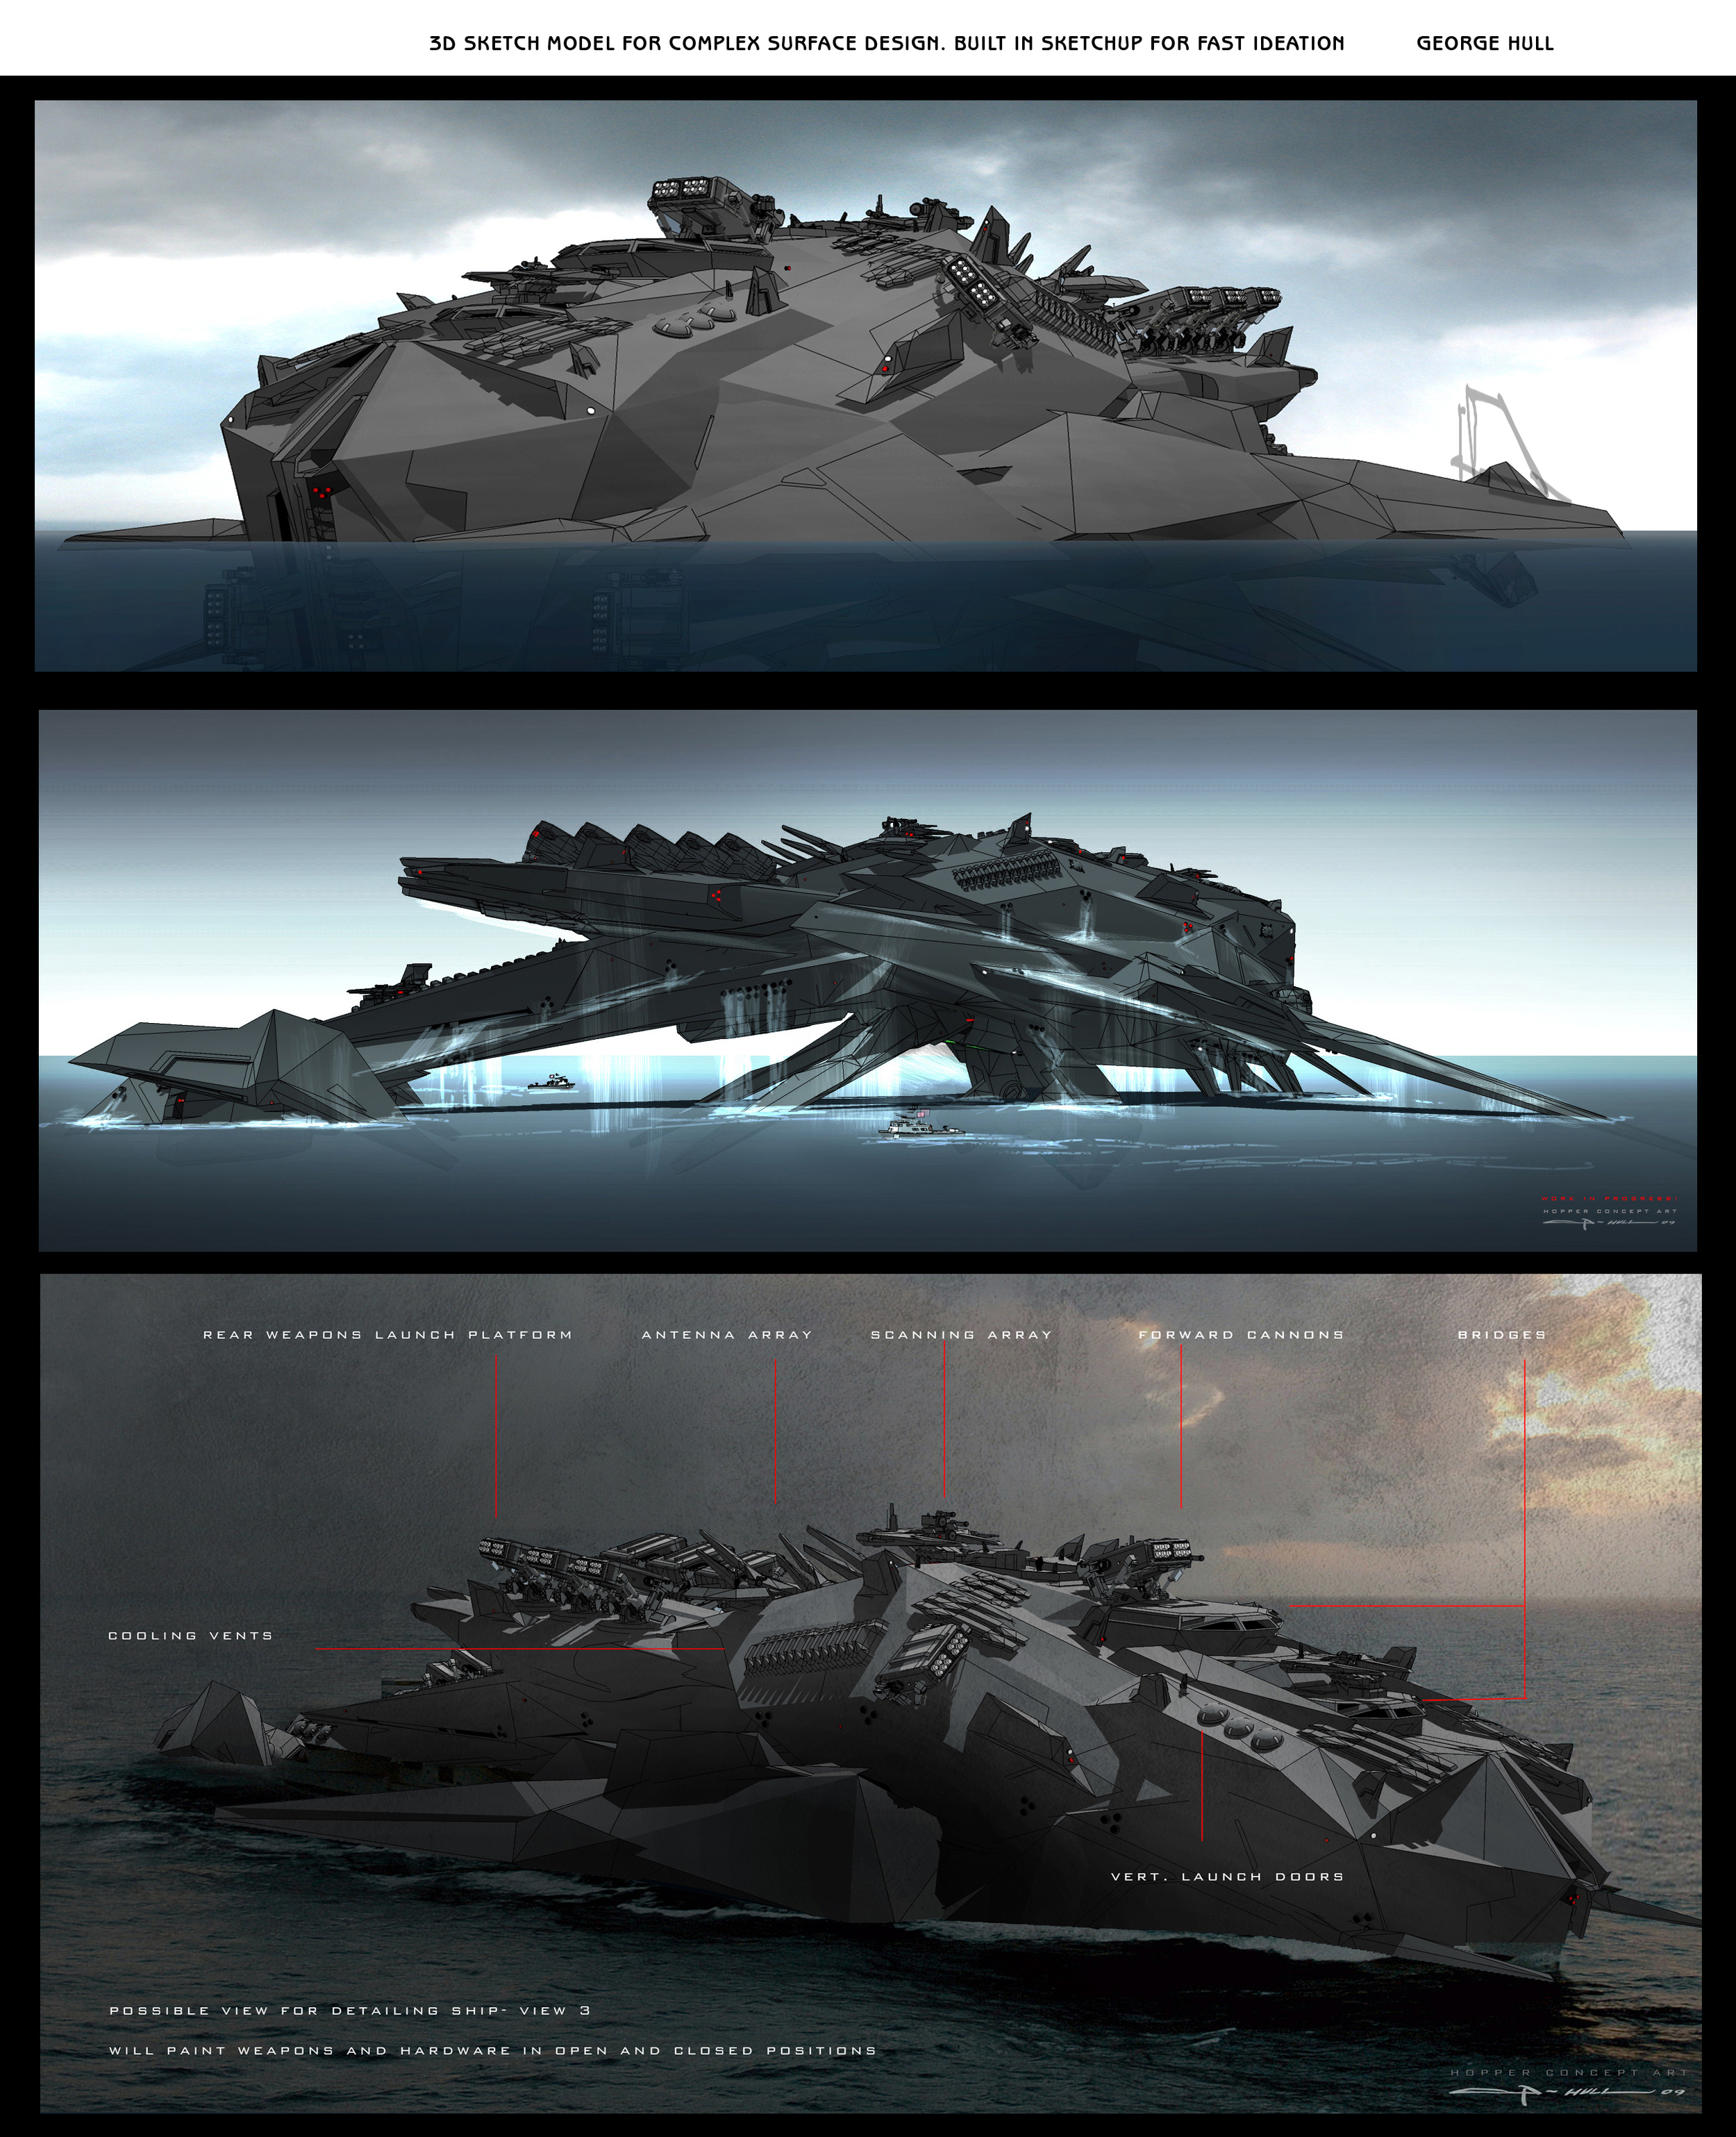 Battleship14_SketchModelpage2_ghull.jpg